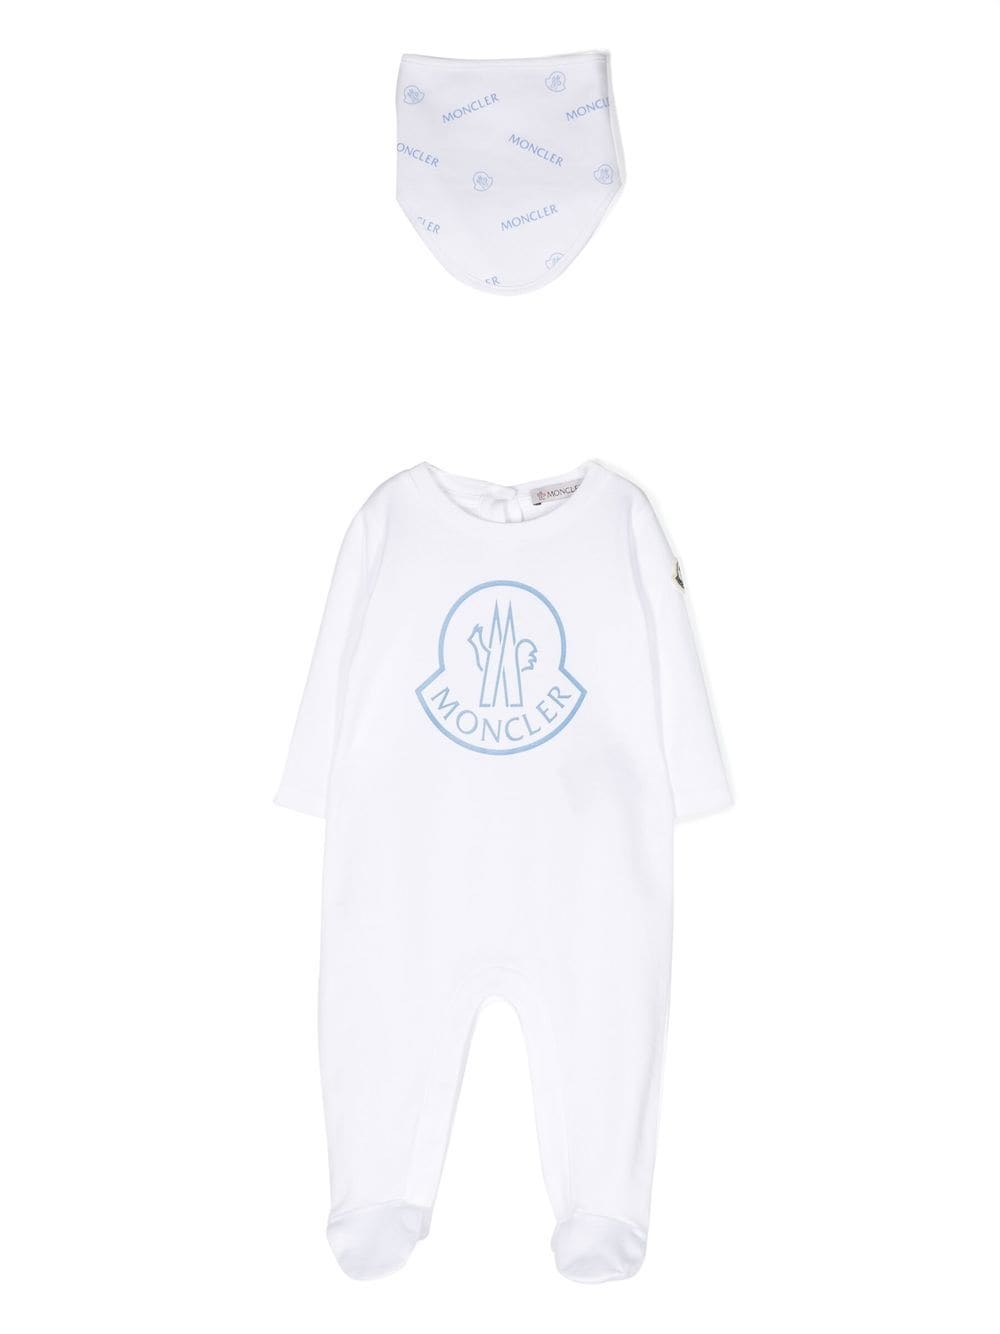 Moncler Enfant logo-print babygrow set - White von Moncler Enfant